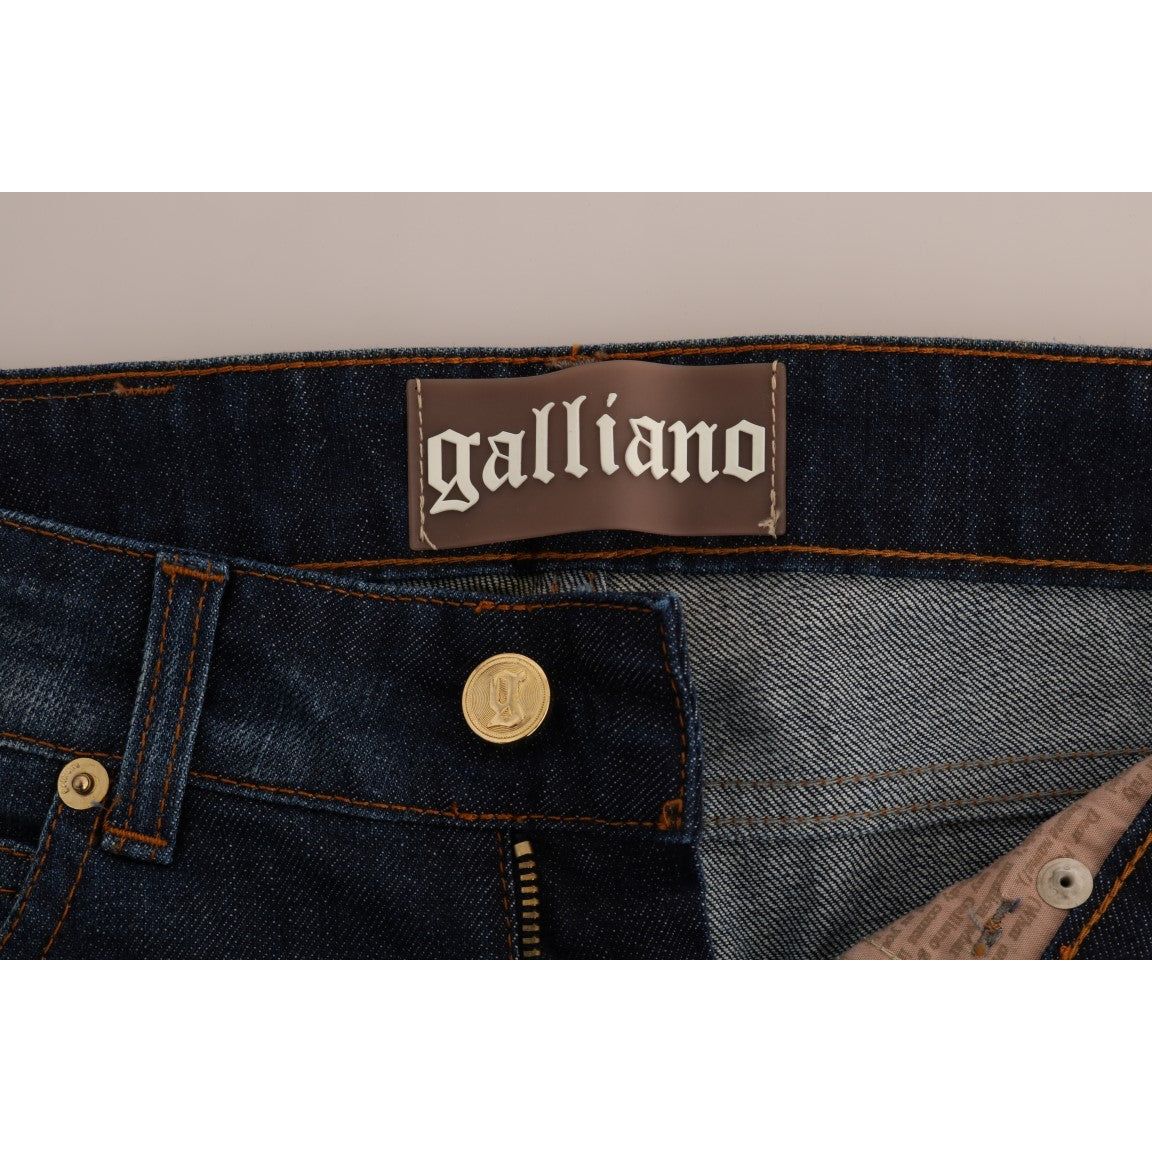 John Galliano Stylish Skinny Low Rise Denim Jeans blue-wash-cotton-stretch-skinny-low-jeans 490796-blue-wash-cotton-stretch-skinny-low-jeans-4.jpg